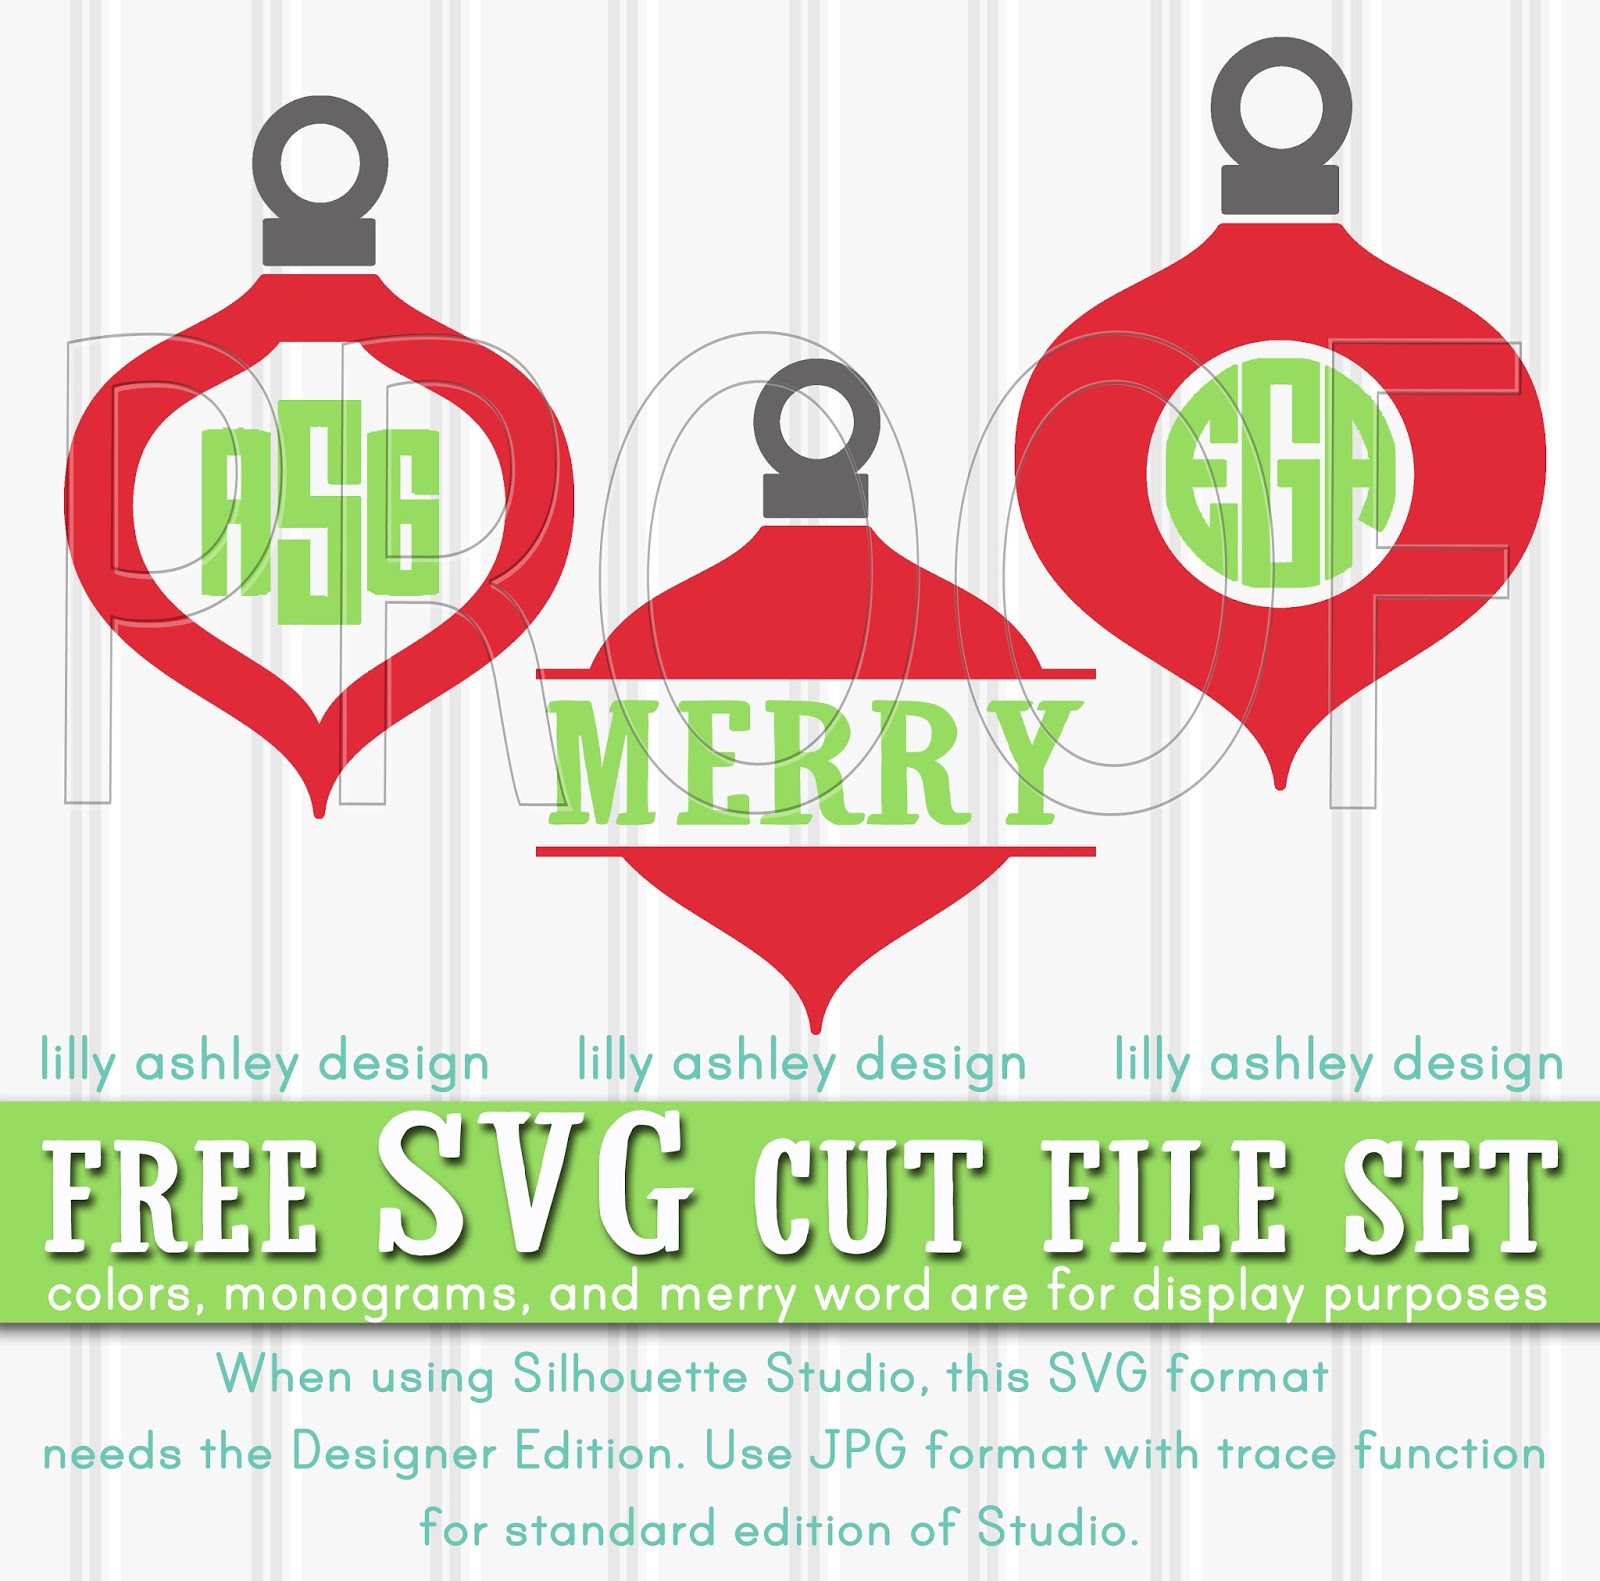 Make it Create by LillyAshley...Freebie Downloads: Free Christmas SVG